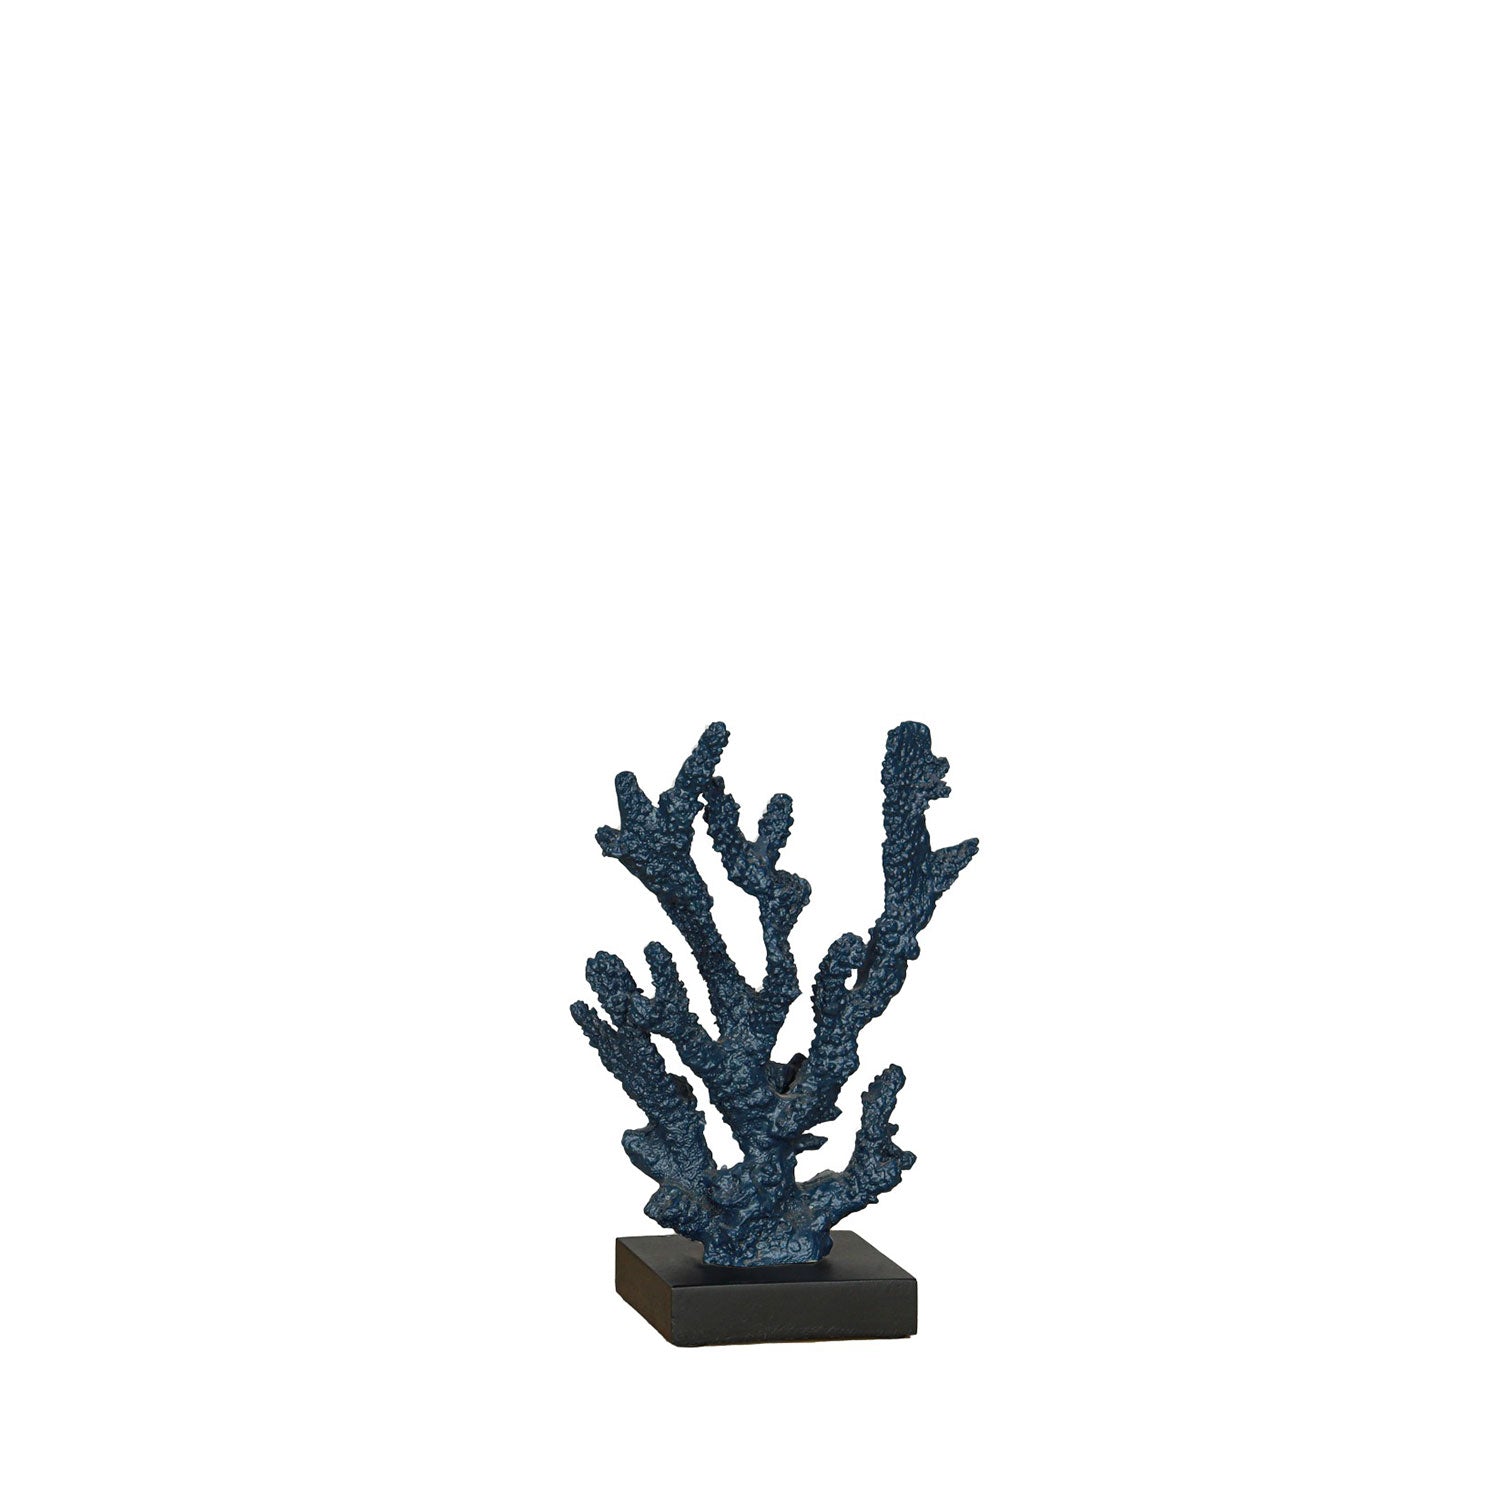 Homedock Escultura Noronha 21 cm - Azul c/ Marrom Devitro